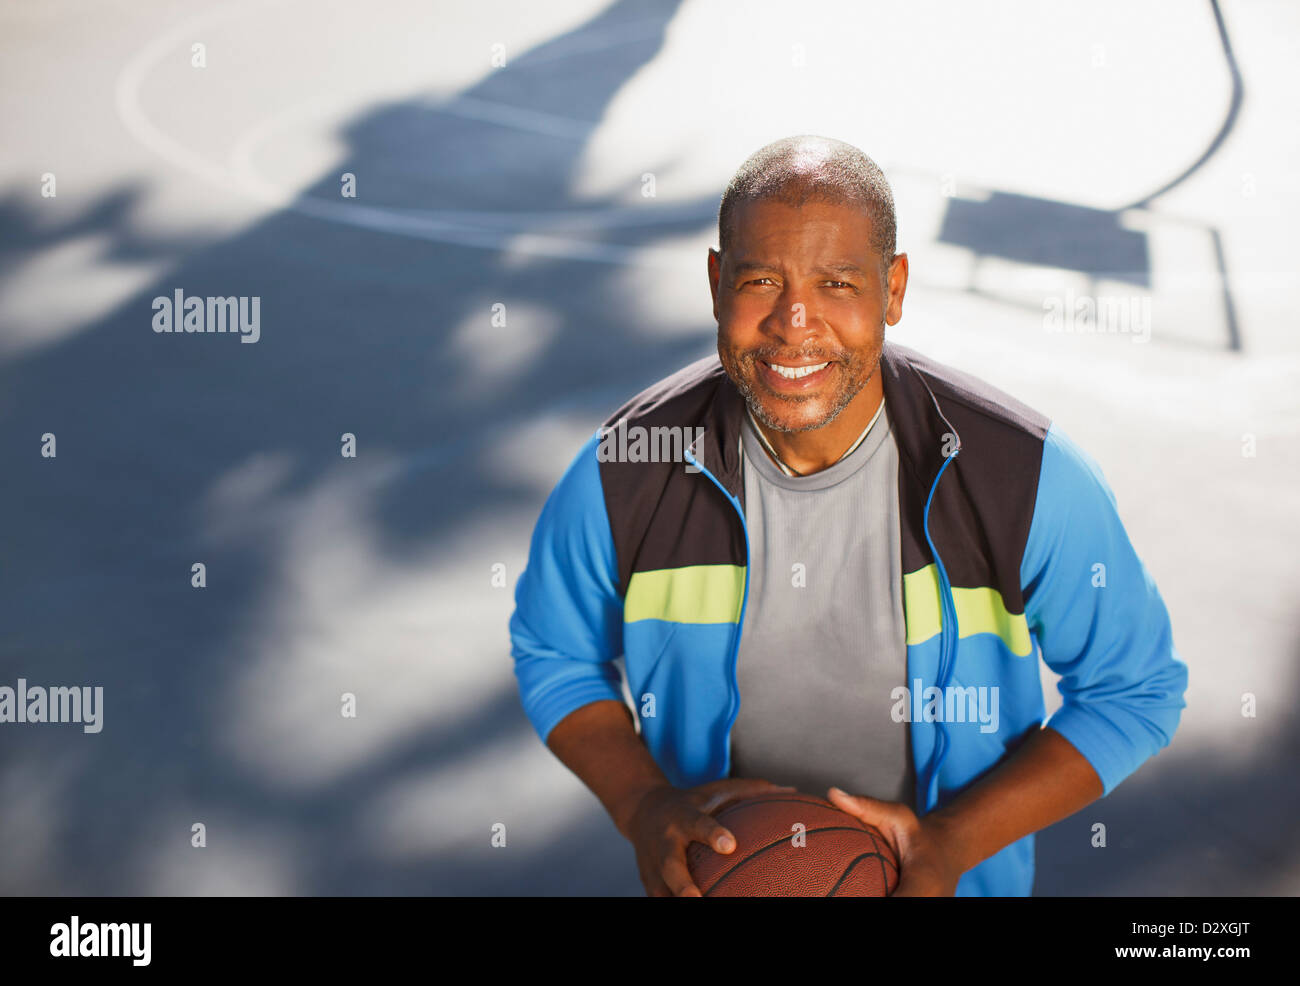 Älterer Mann spielen Basketball auf Platz Stockfoto